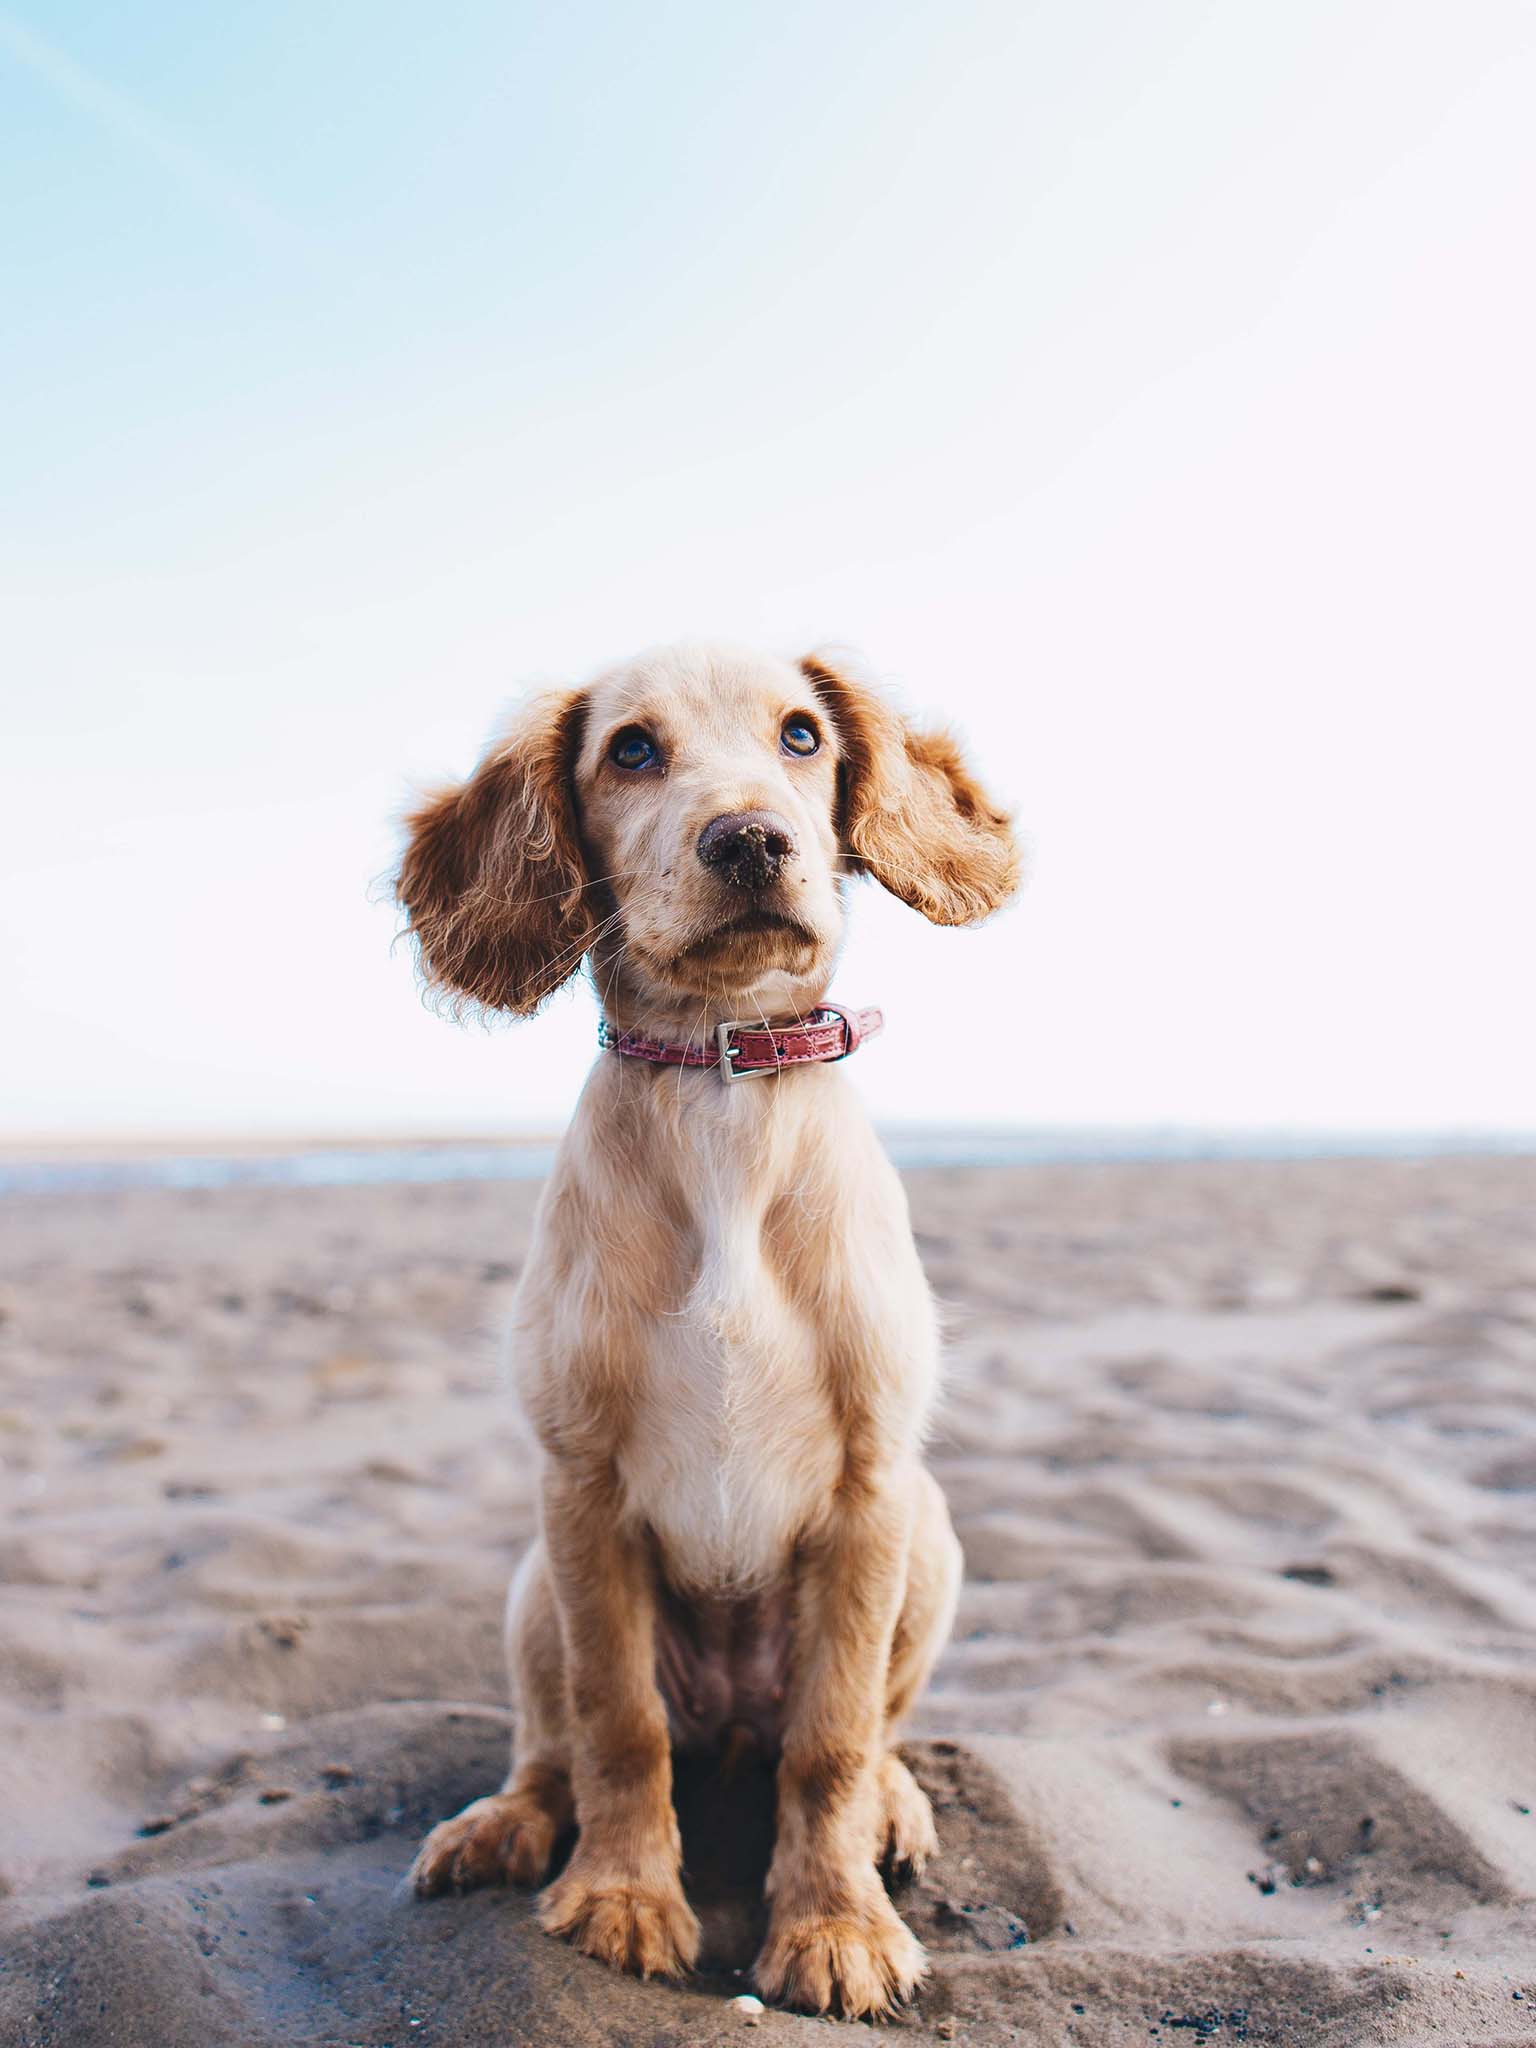 a dog sitting on sand